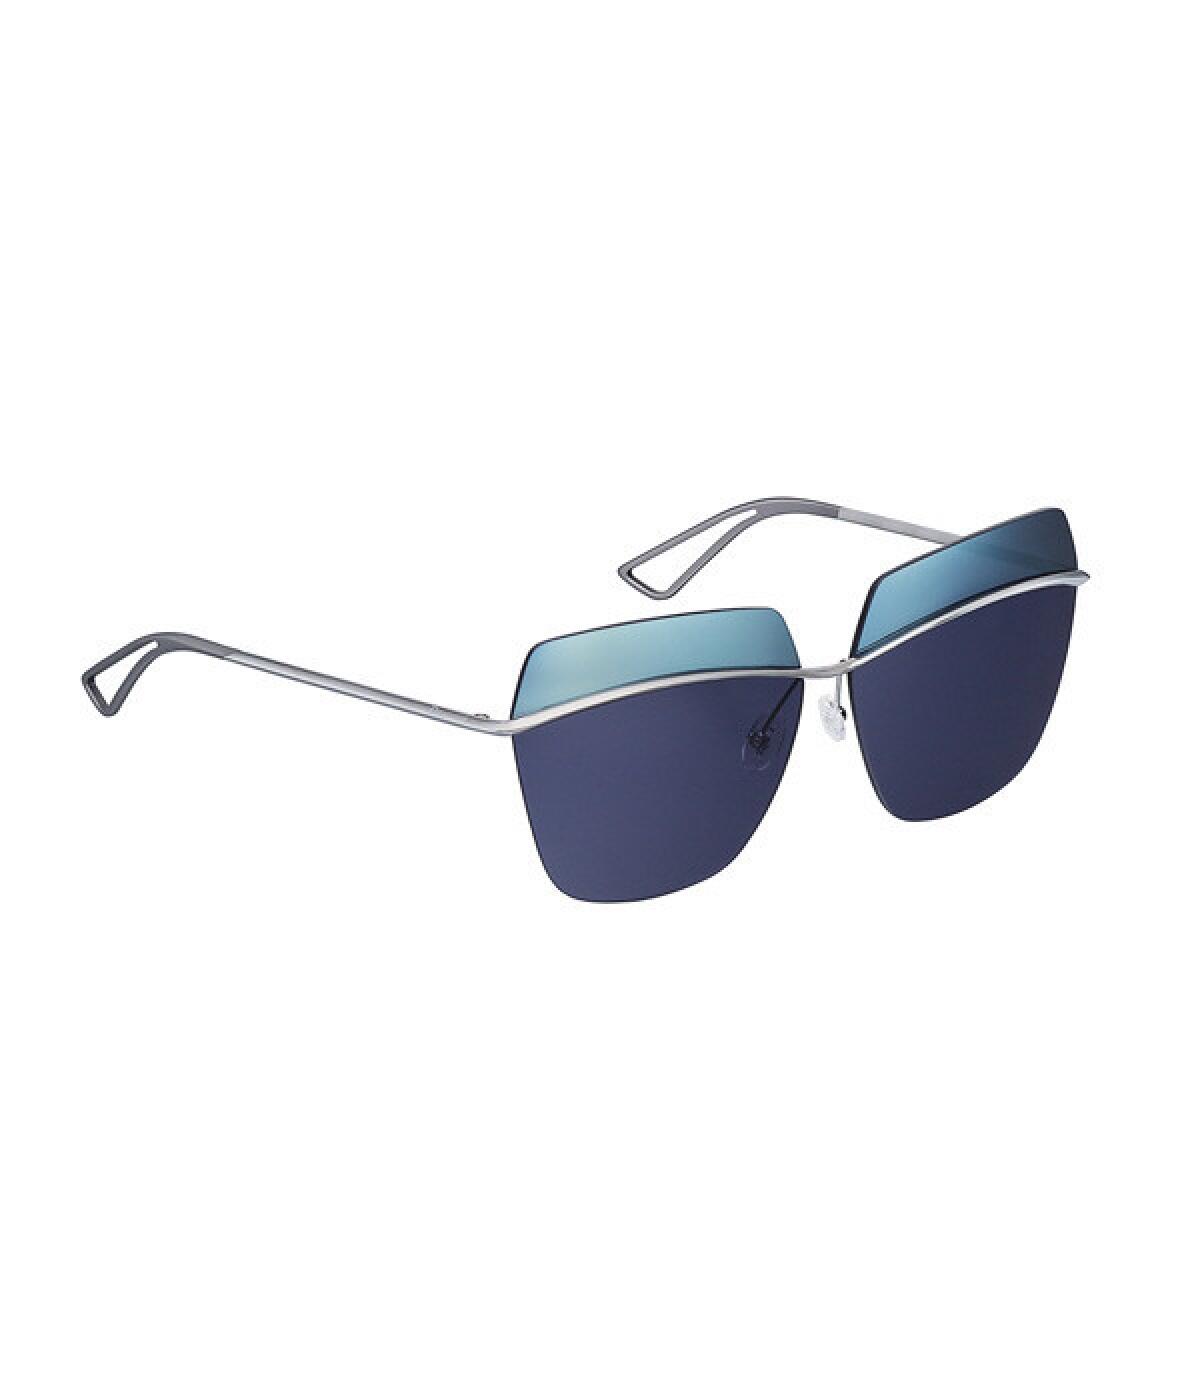 Dior "Diormetallic" sunglasses.